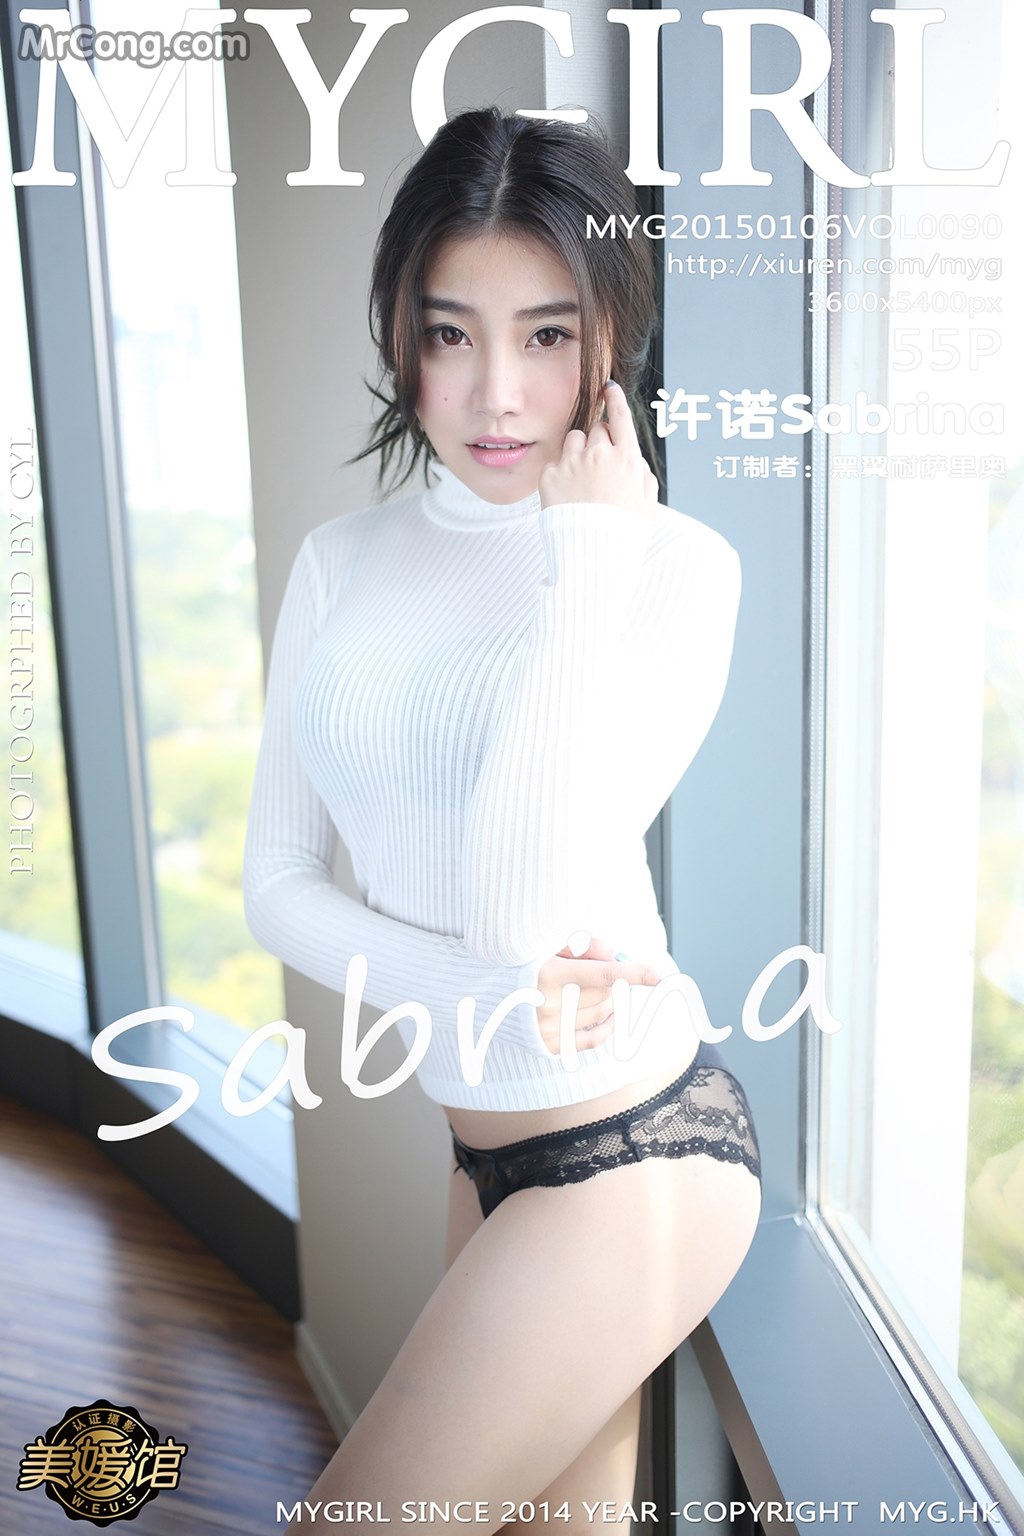 MyGirl Vol.090: Model Sabrina (许诺) (56 photos) photo 1-0